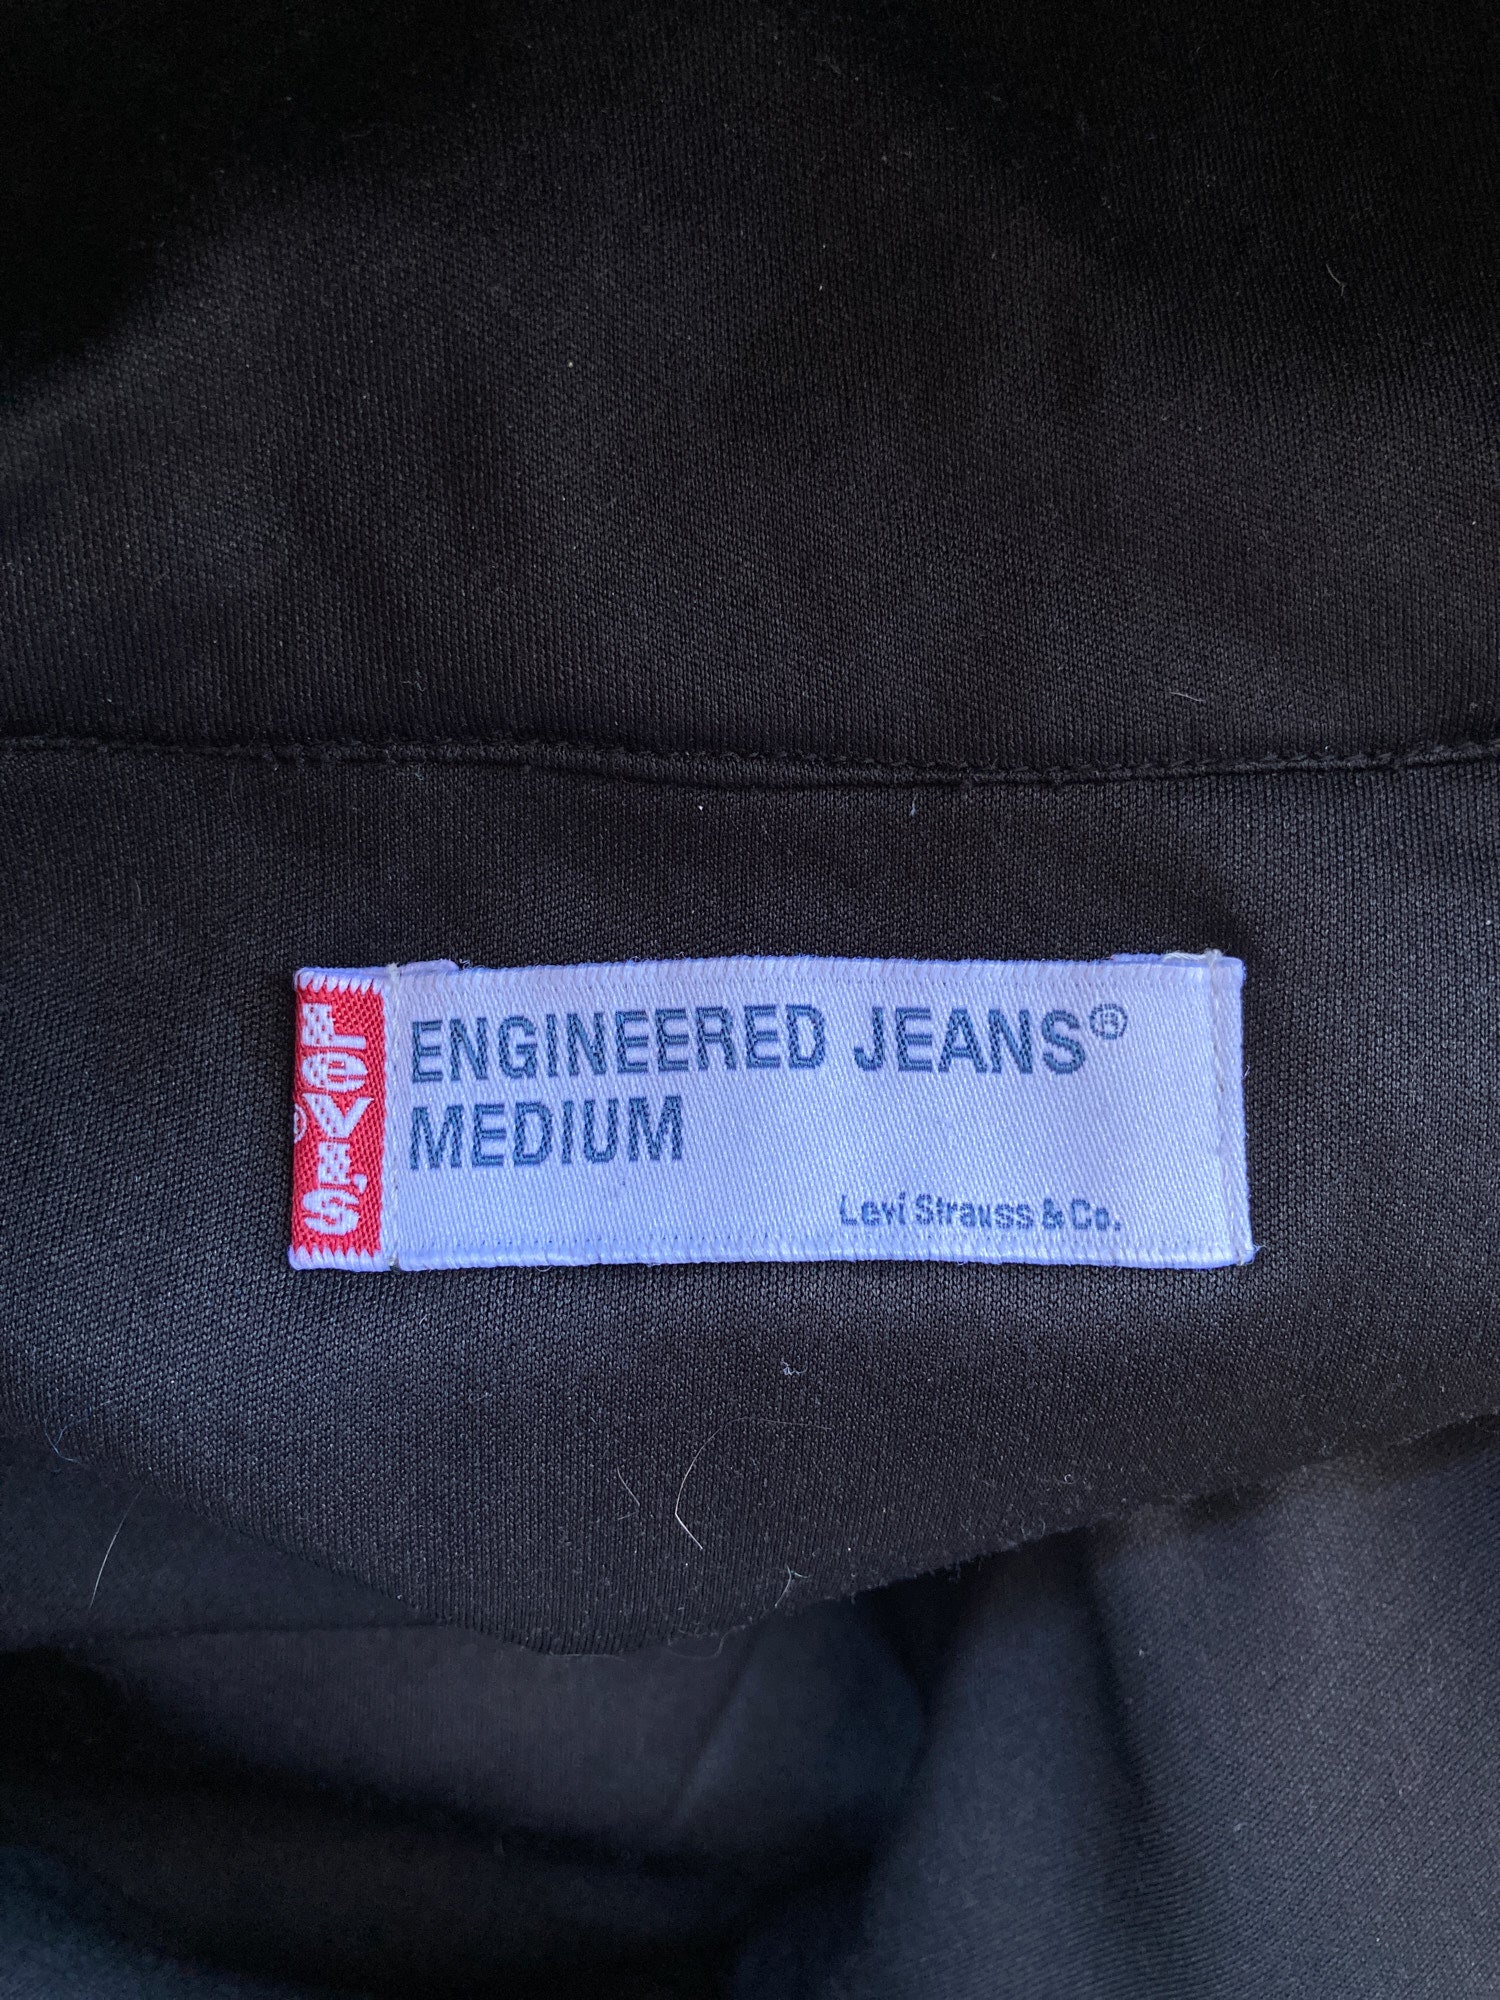 Levi’s Engineered Jeans dark green-grey nylon hooded crotch flap parka